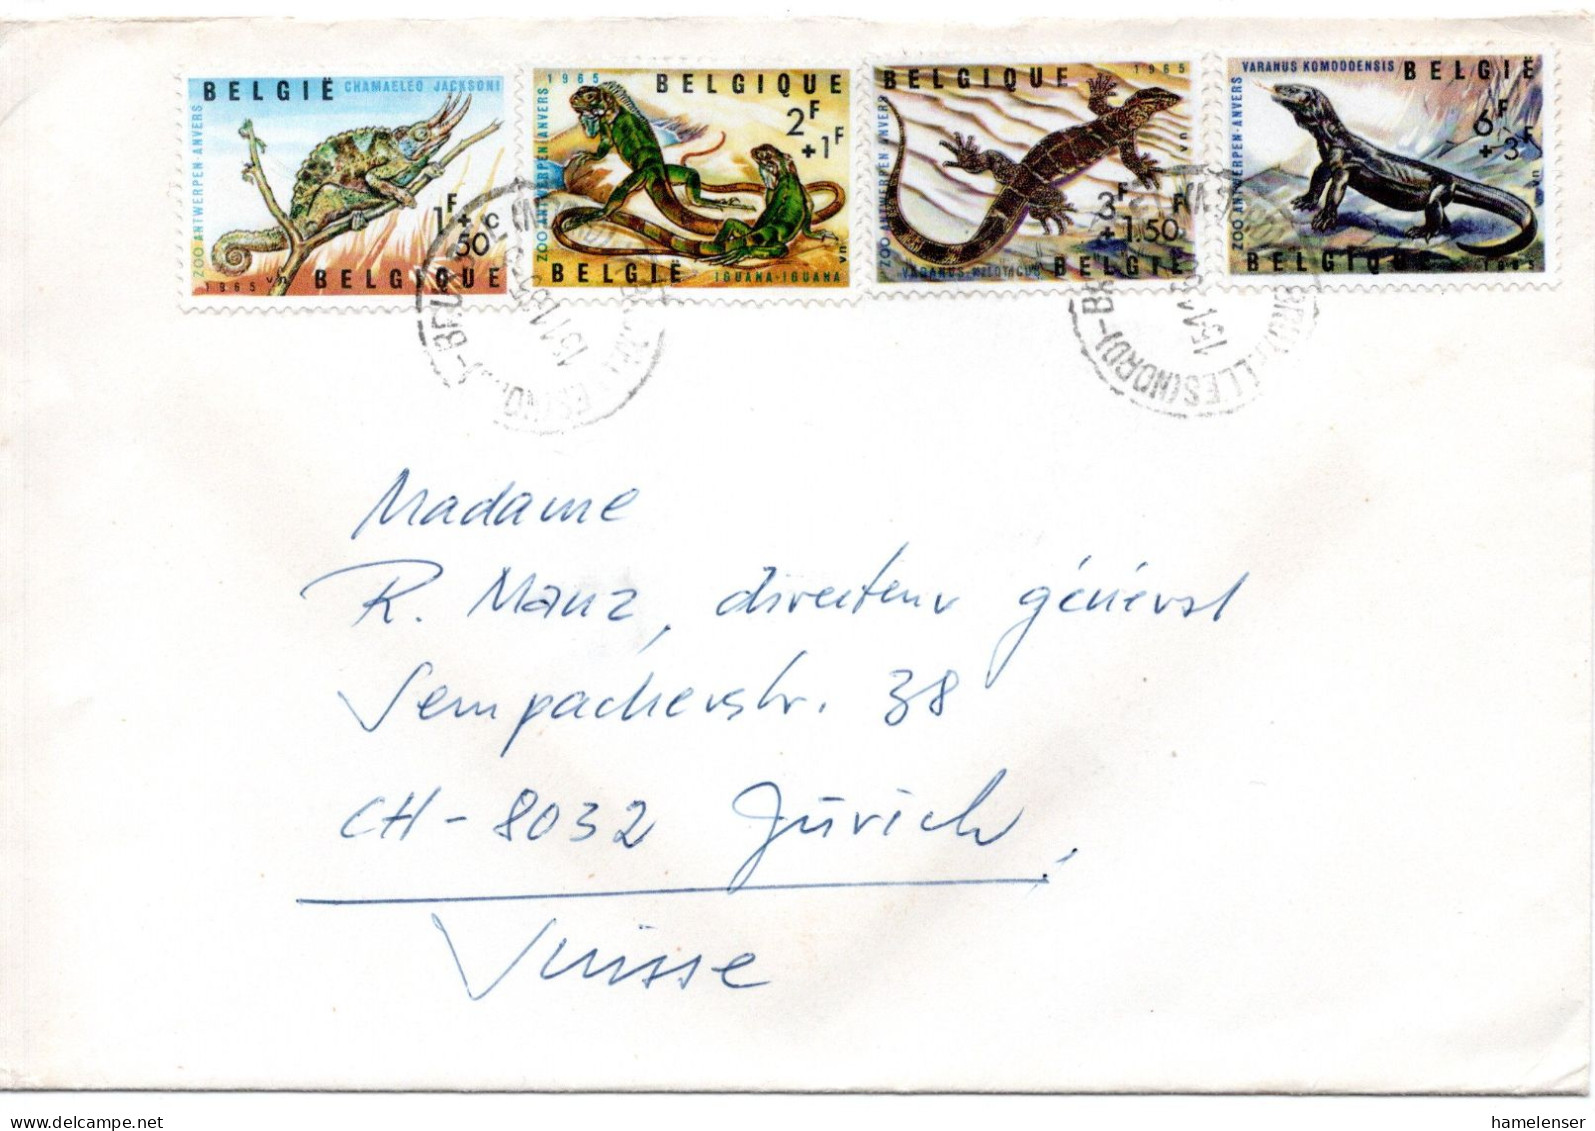 68201 - Belgien - 1965 - 4Wte Zoo Antwerpen MiF A Bf BRUXELLES -> Schweiz - Briefe U. Dokumente